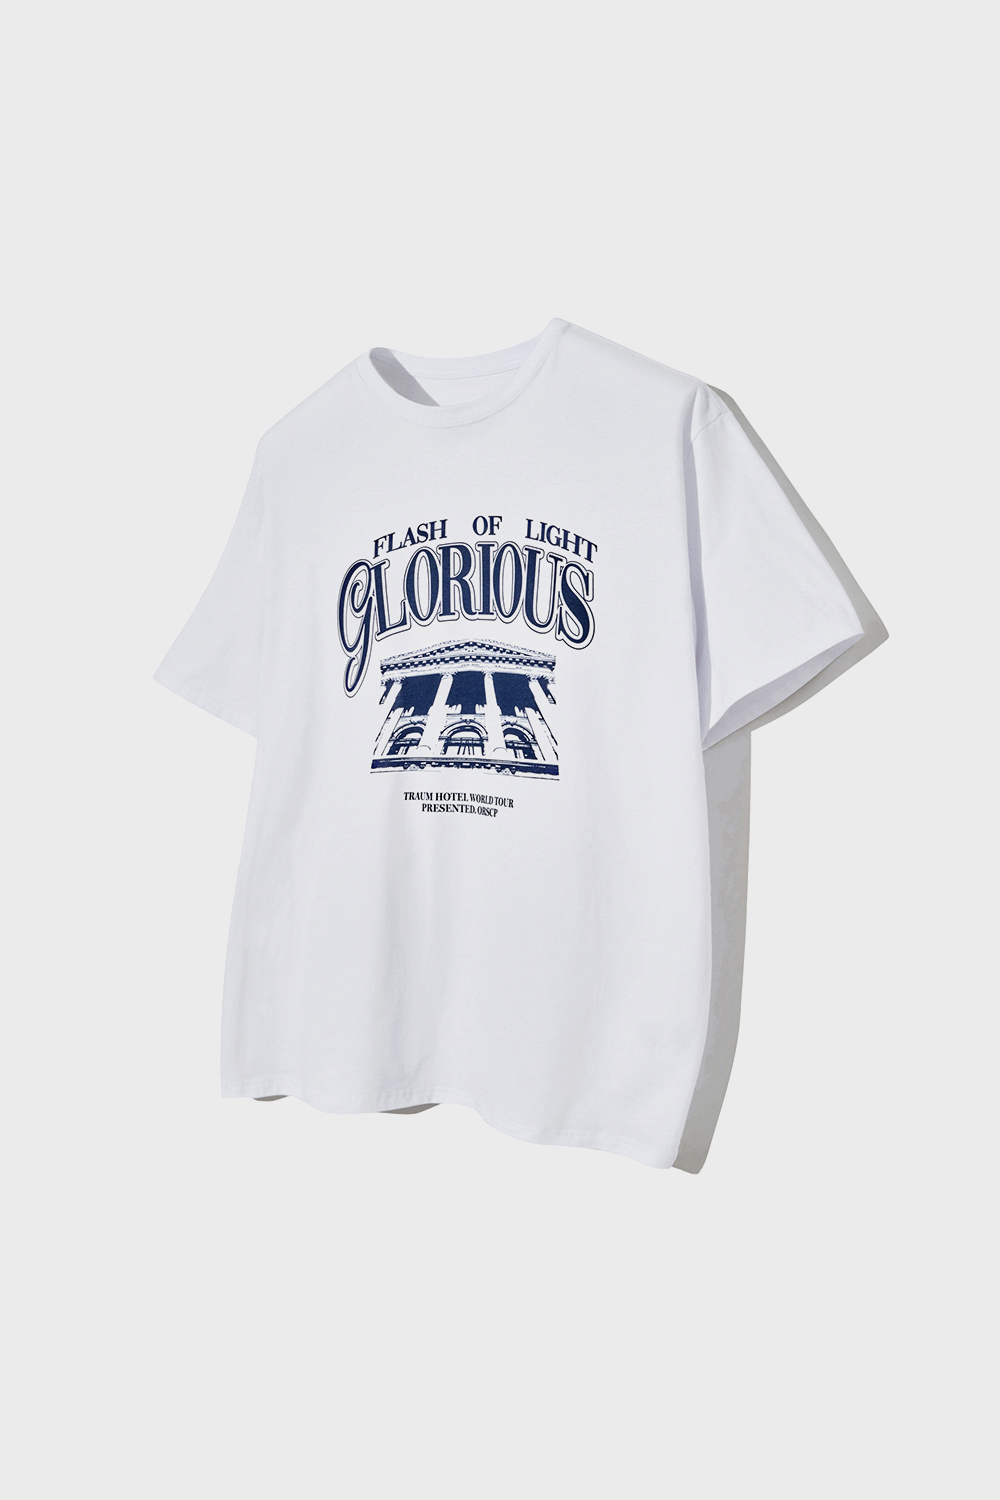 Glorious T-Shirts (White)